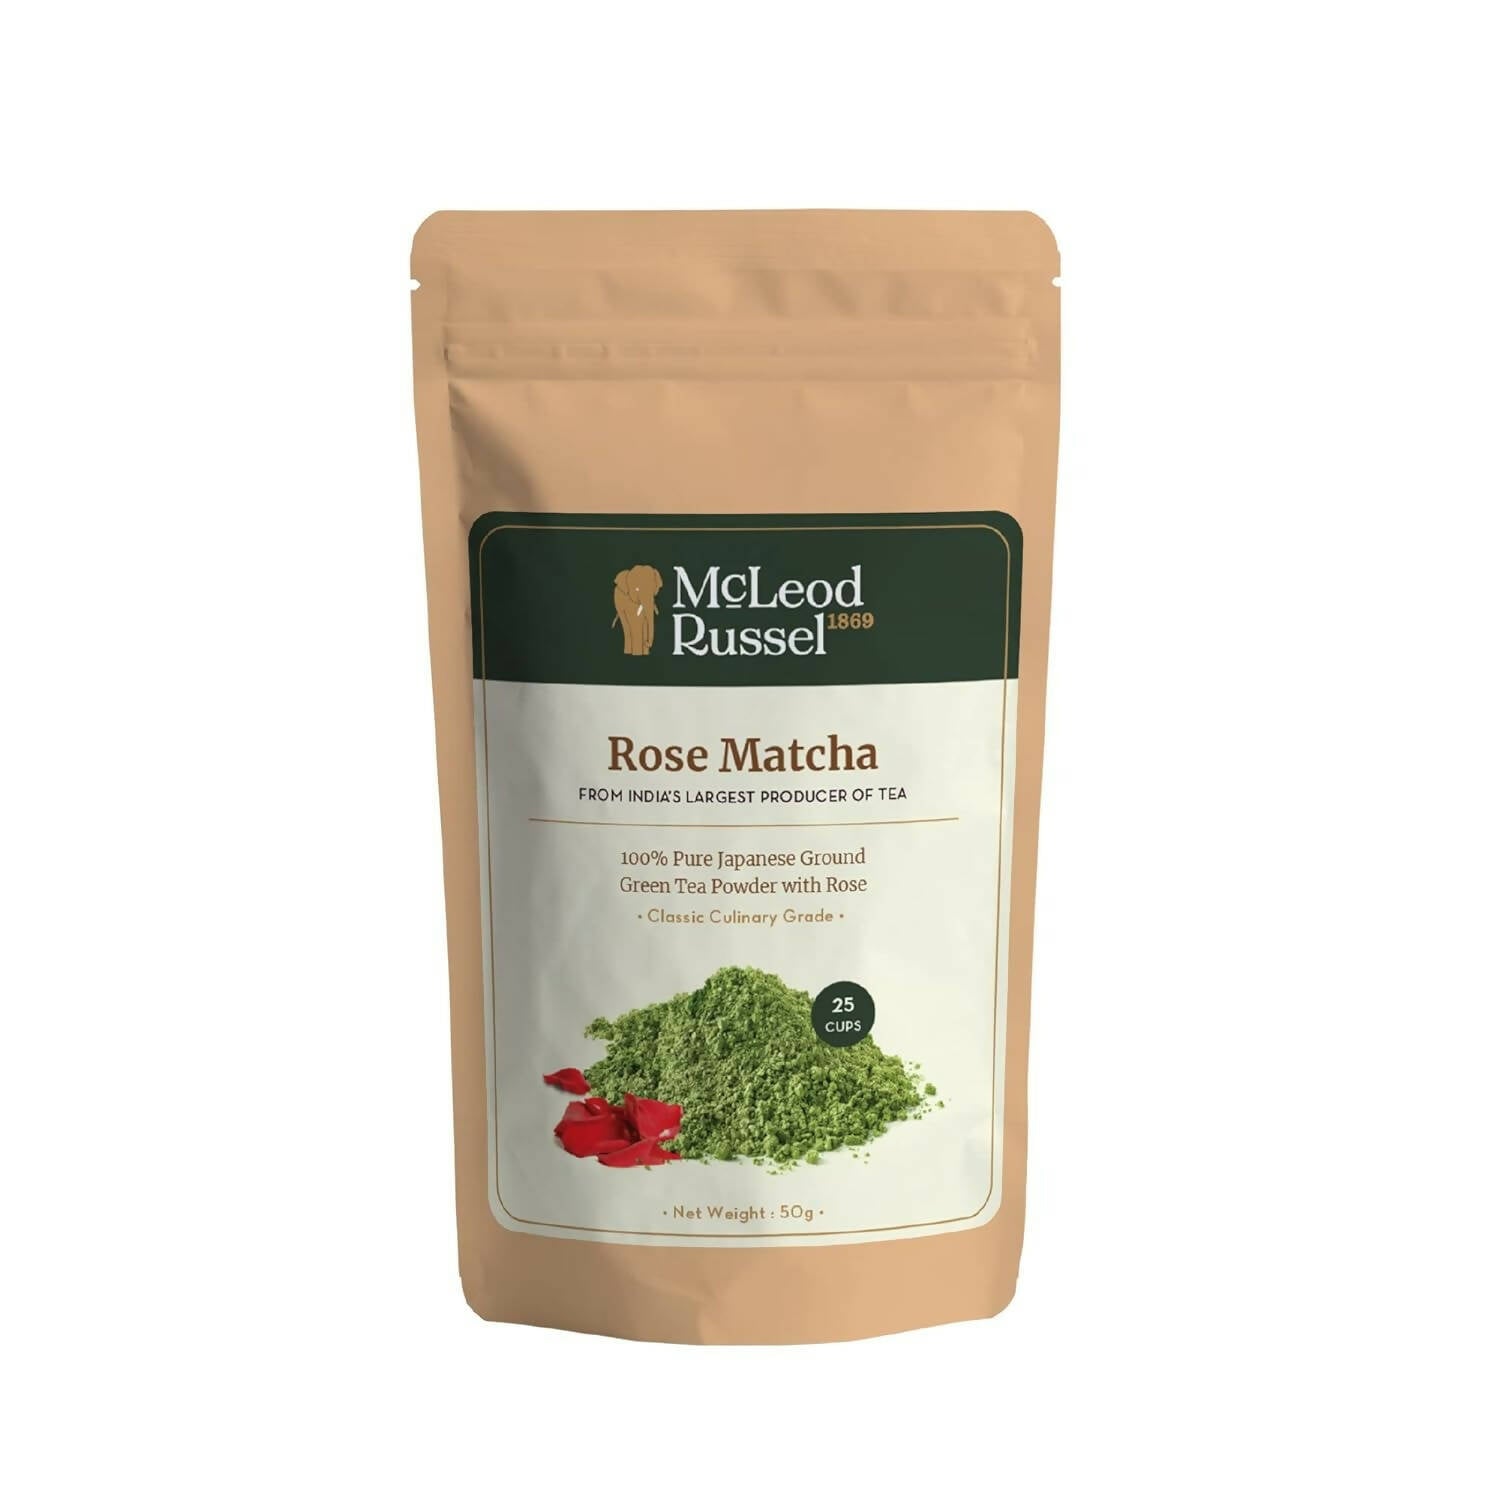 McLeod Russel 1869 Rose Matcha - 100% Pure Japanese Matcha Green Tea -  buy in usa 